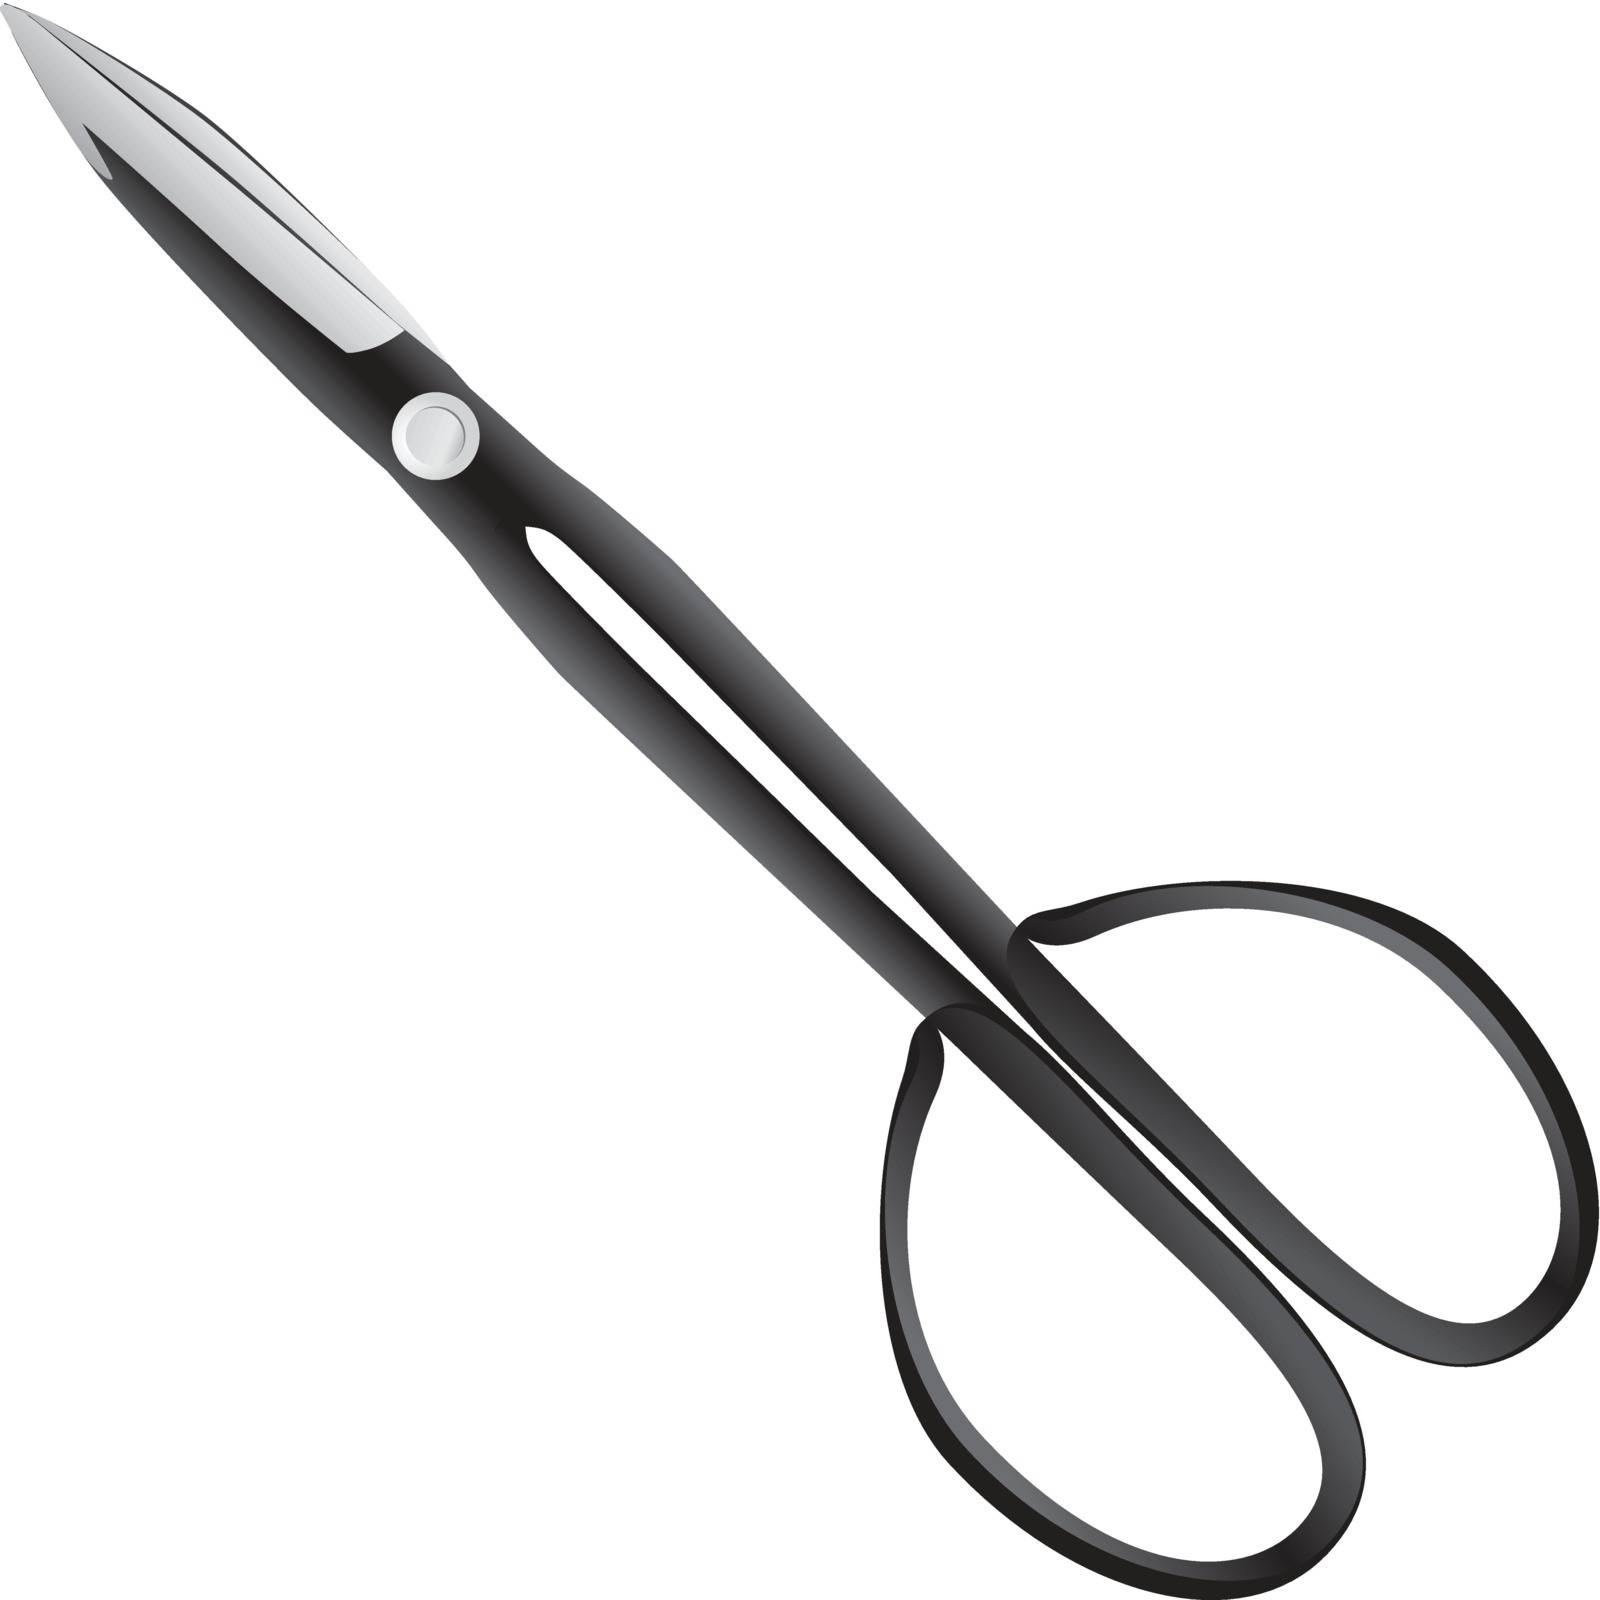 Long scissors to trim bonsai. Vector illustration.